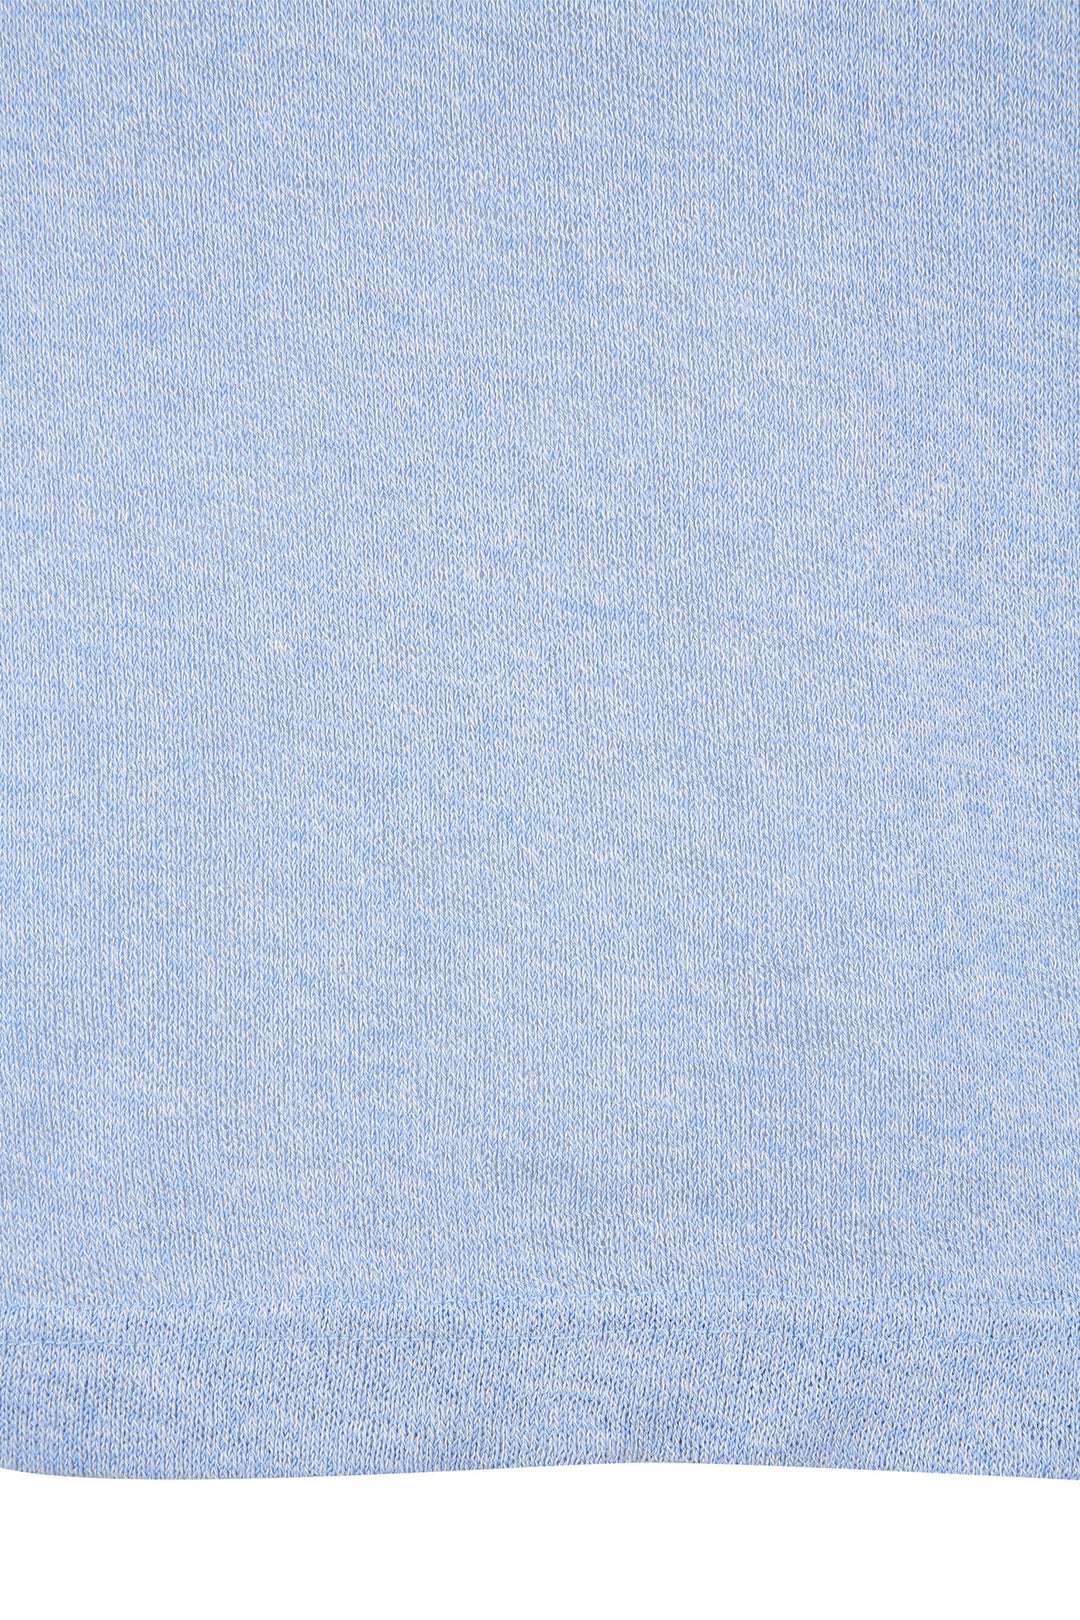 Doris Streich 244 151 55 Blue Fine Knit V-Neck Jumper - Shirley Allum Boutique